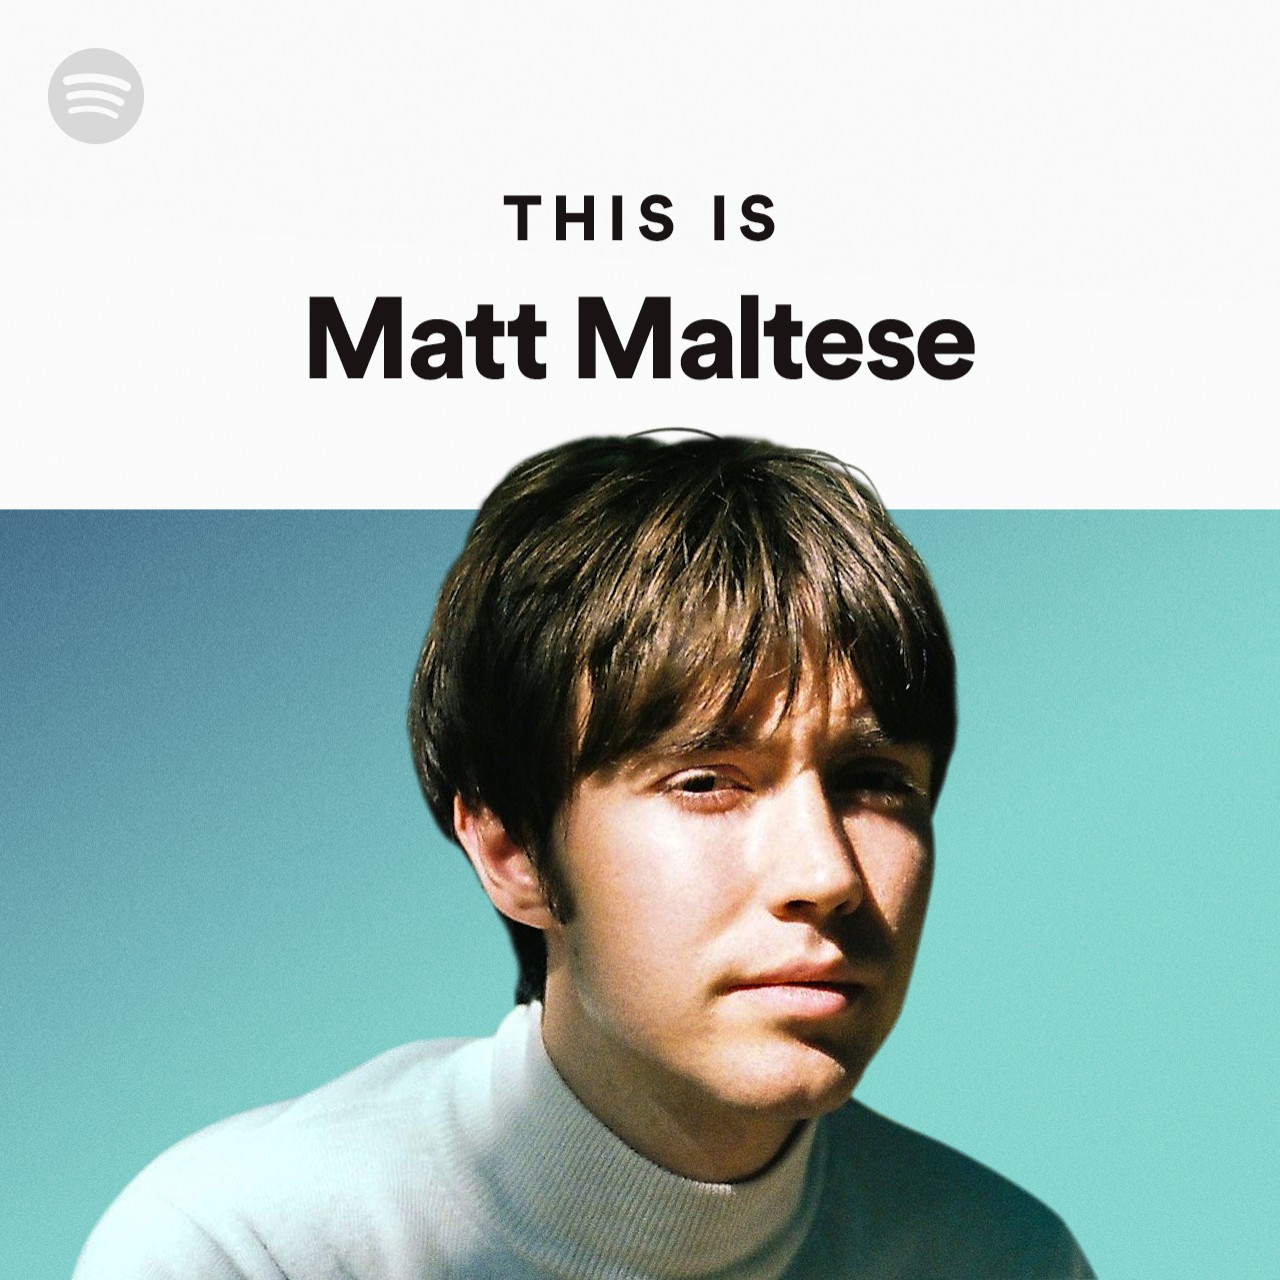 Matt maltese